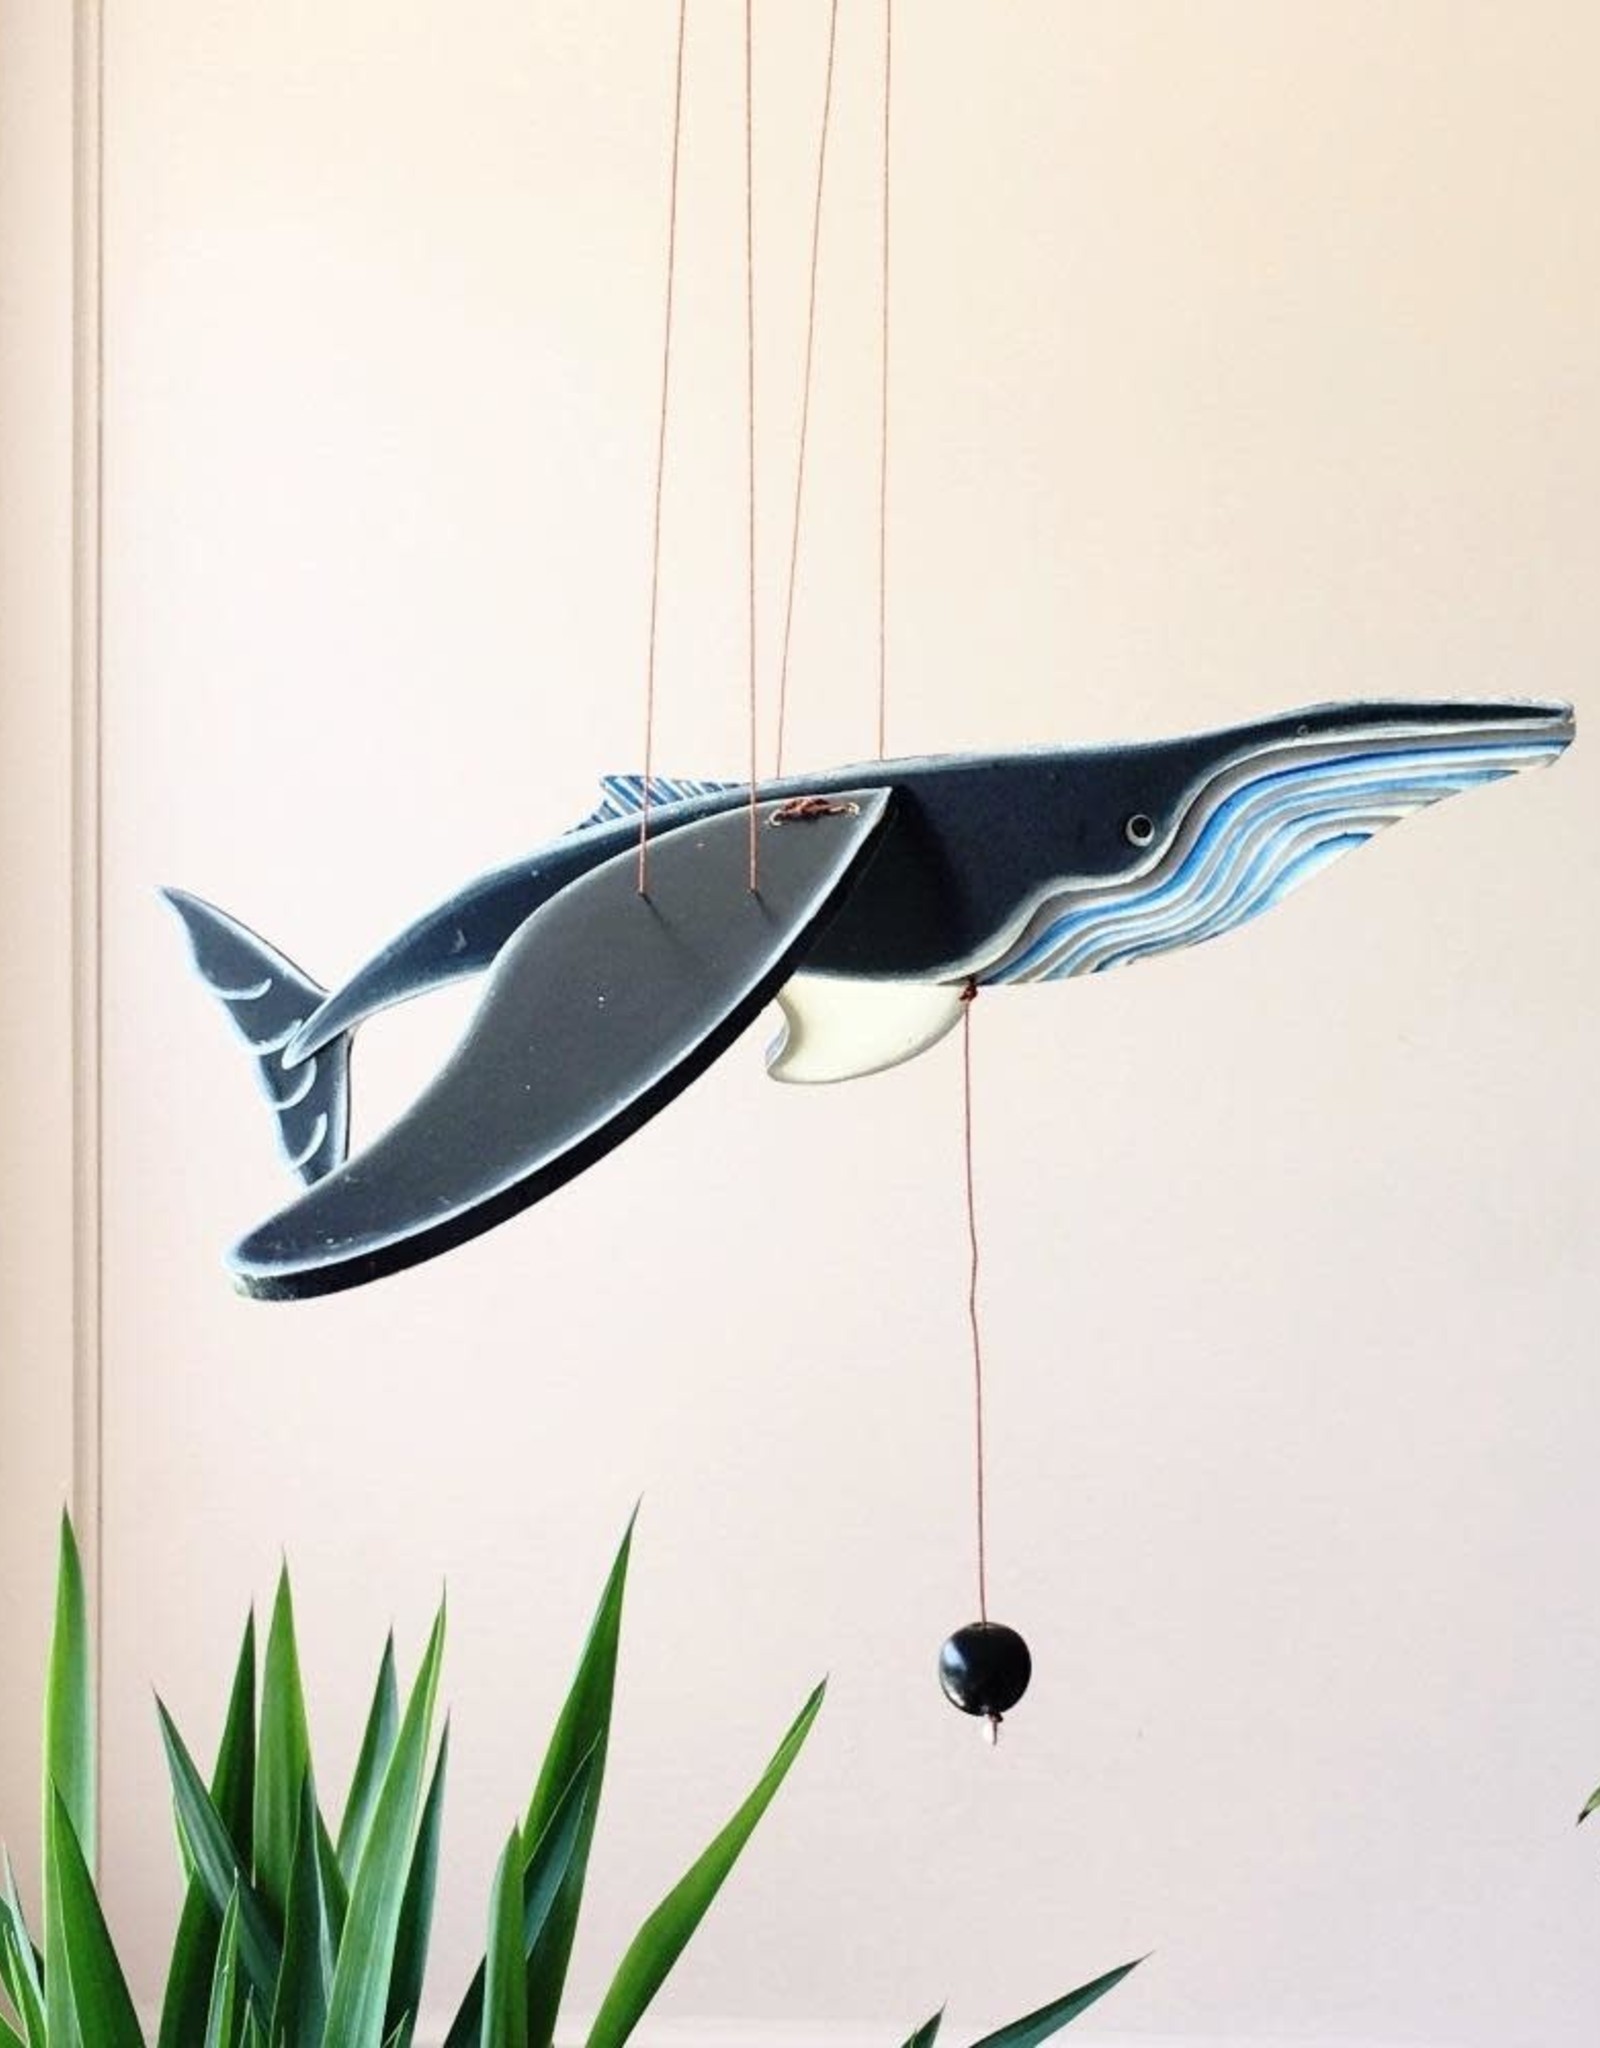 Tulia Artisans Whale Flying Mobile